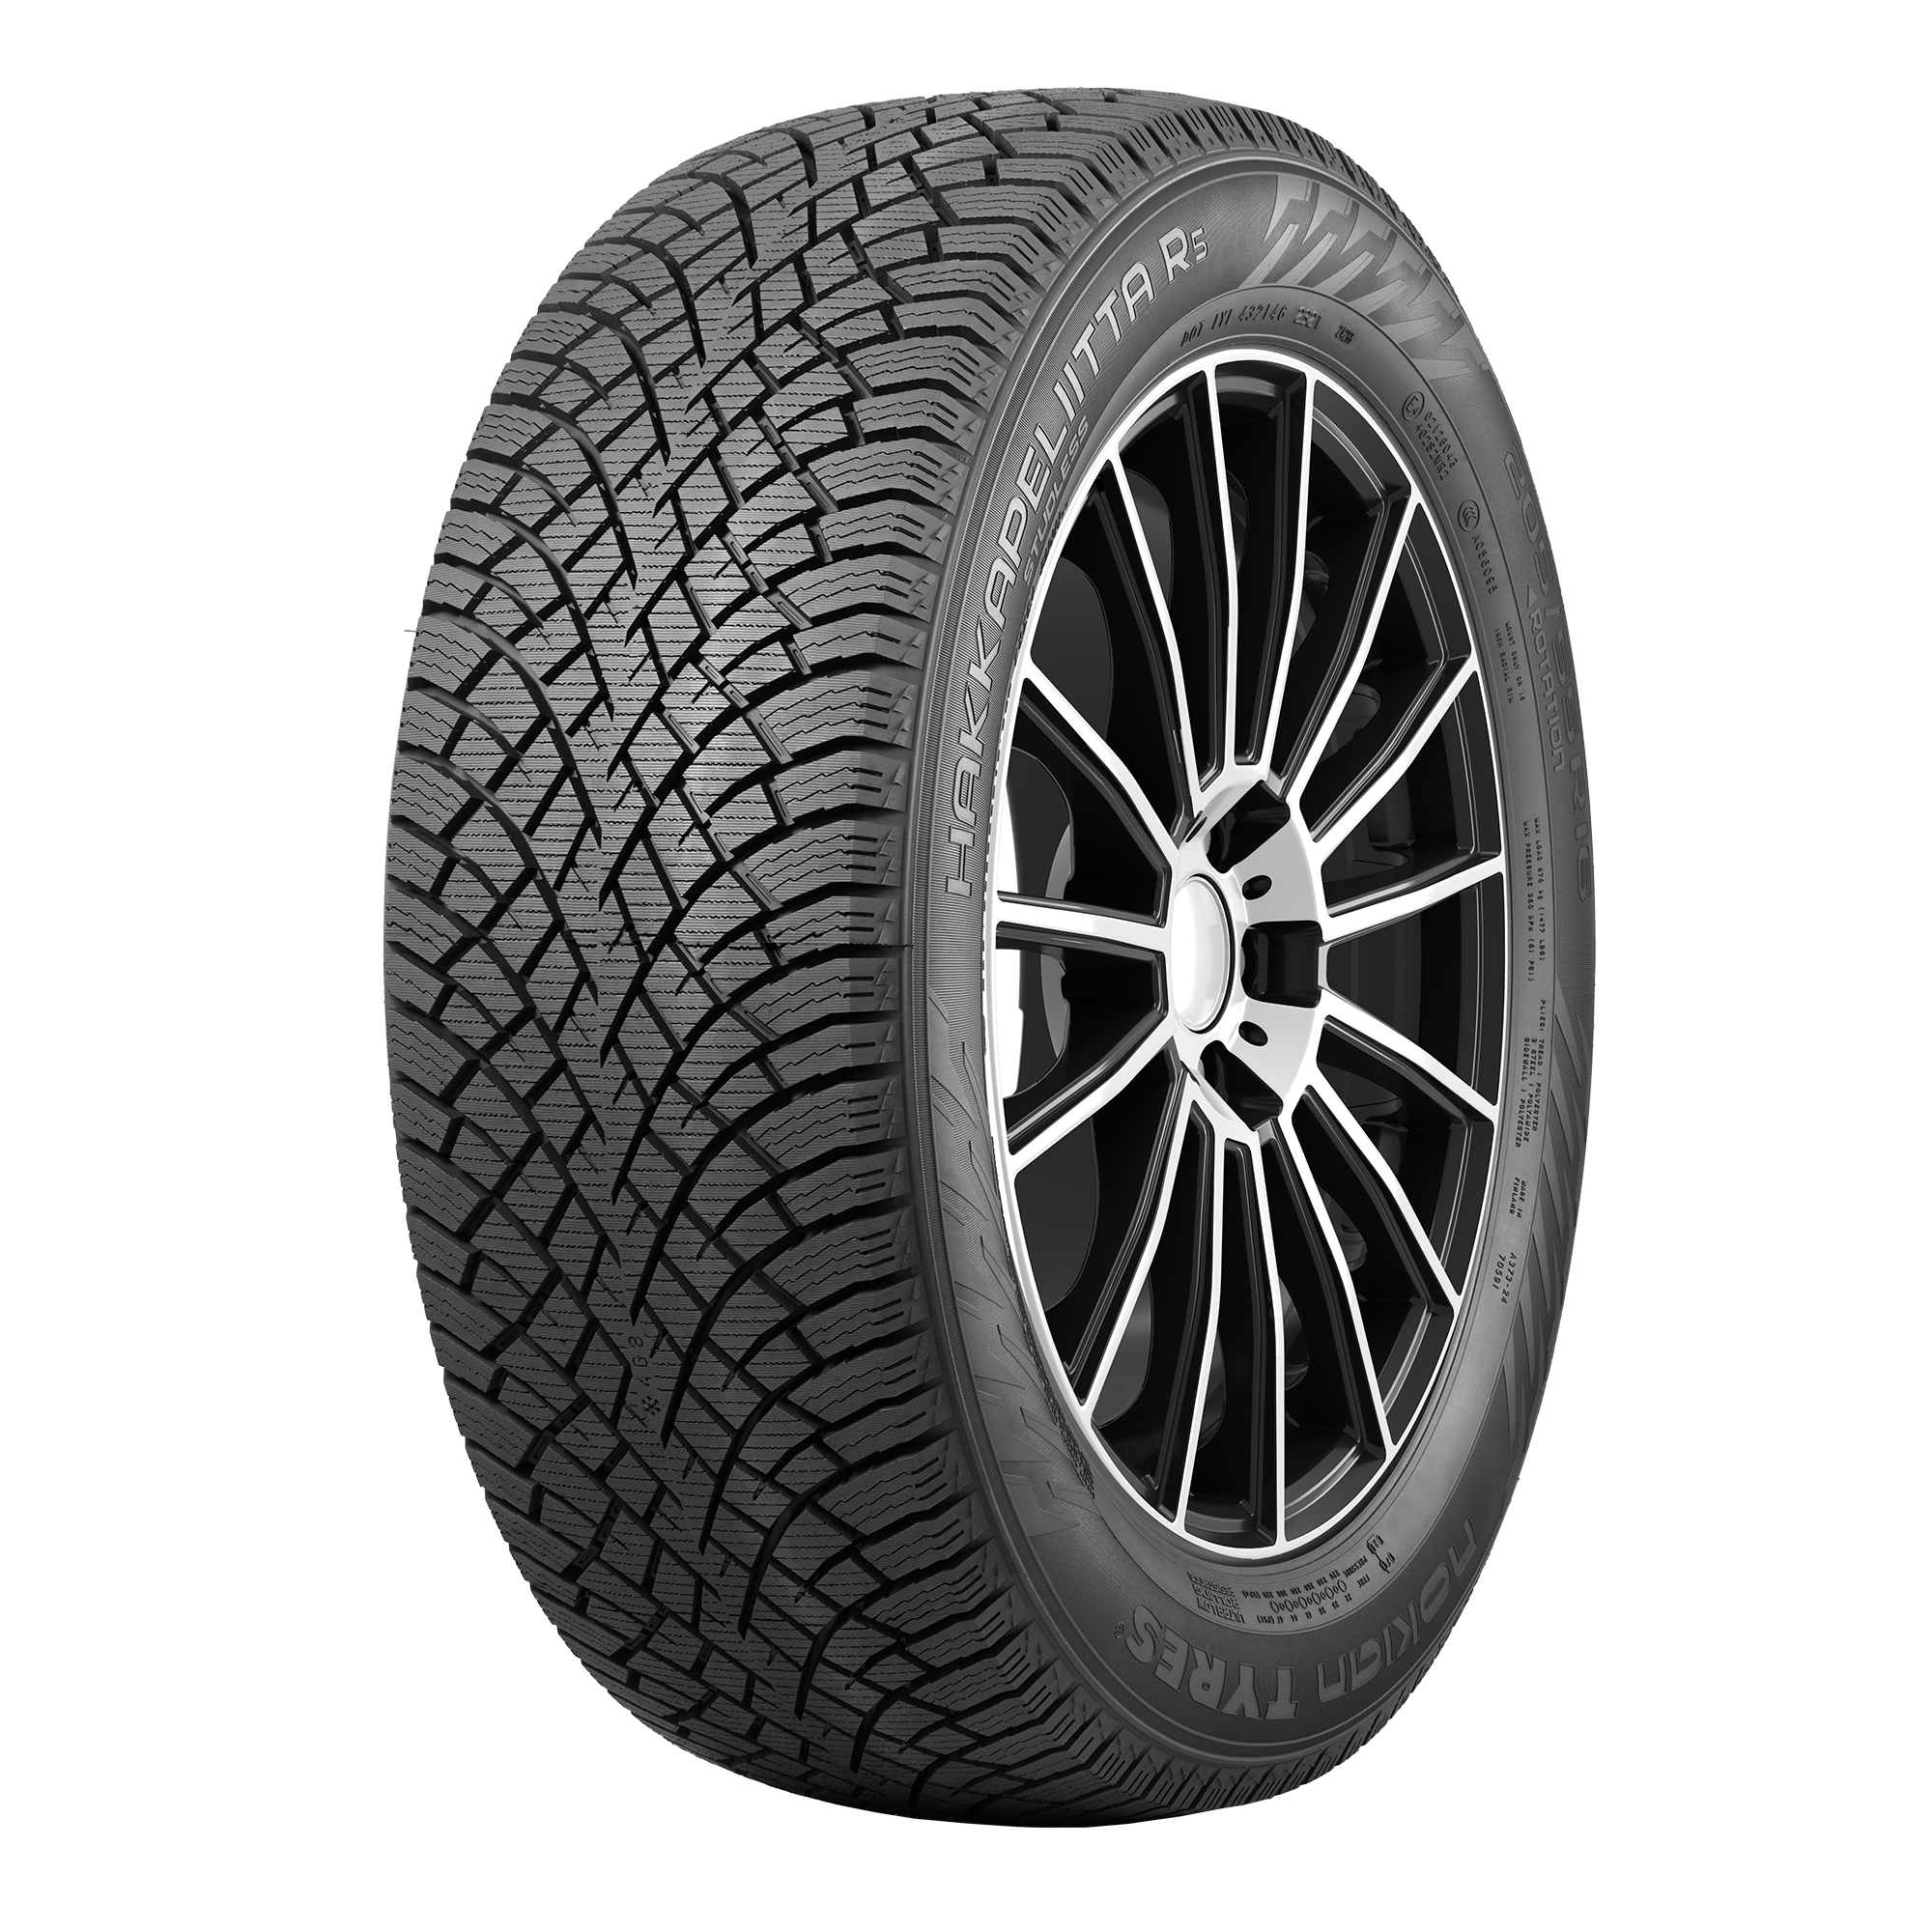 Reviews - Hakkapeliitta R5 Tire Nokian Tests and